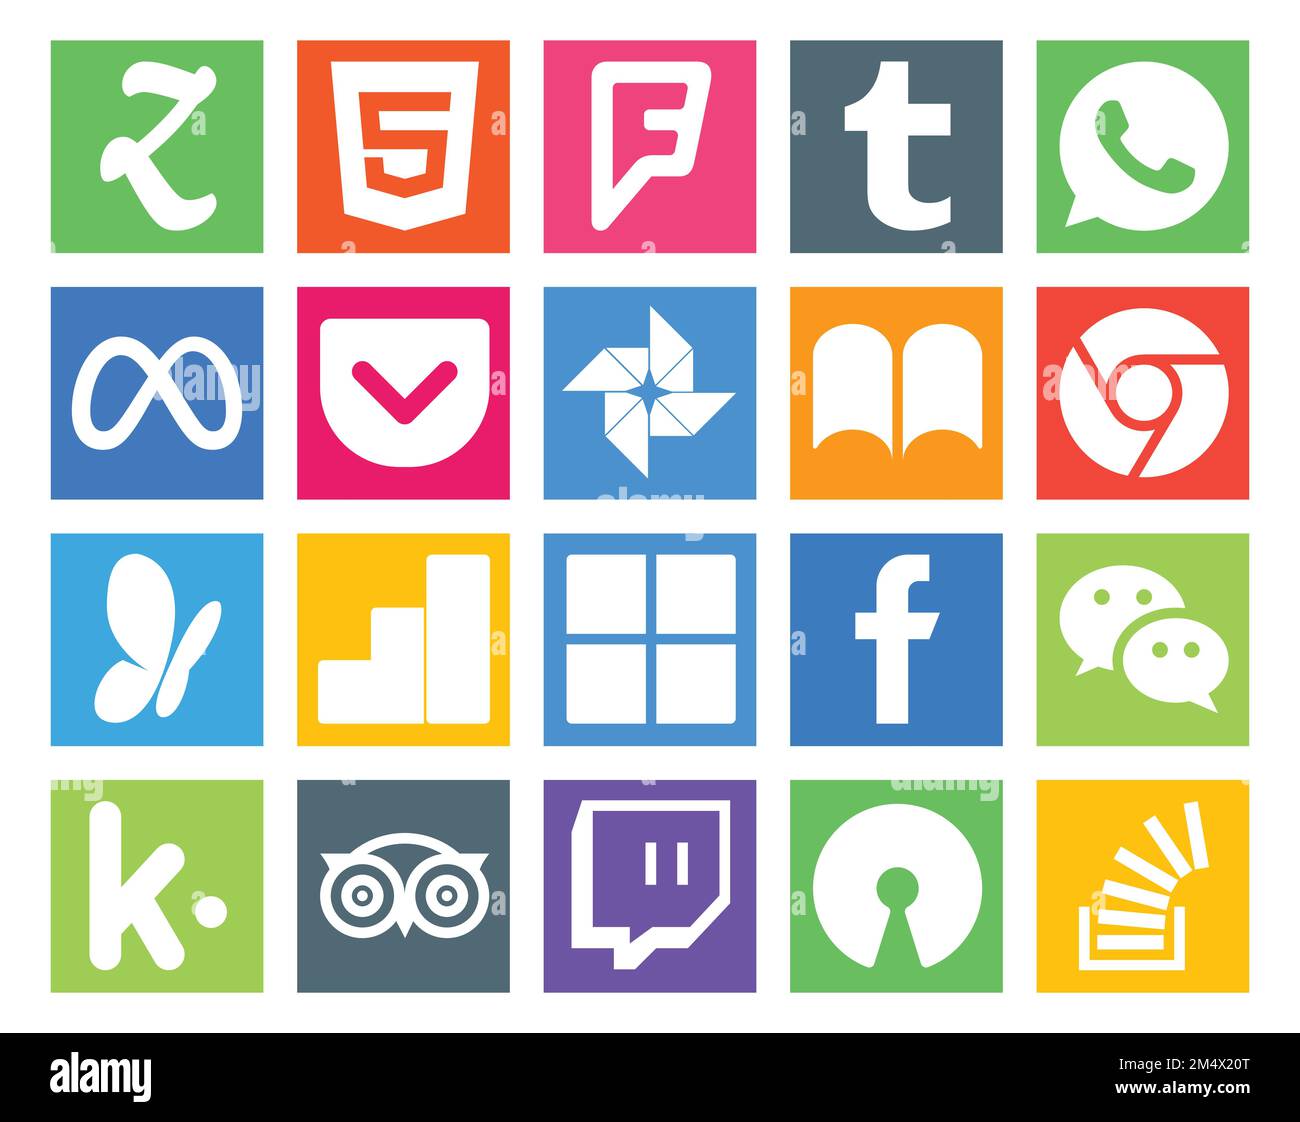 20 Social Icon Pack Including kik. photo. google analytics Stock Vector & Art - Alamy